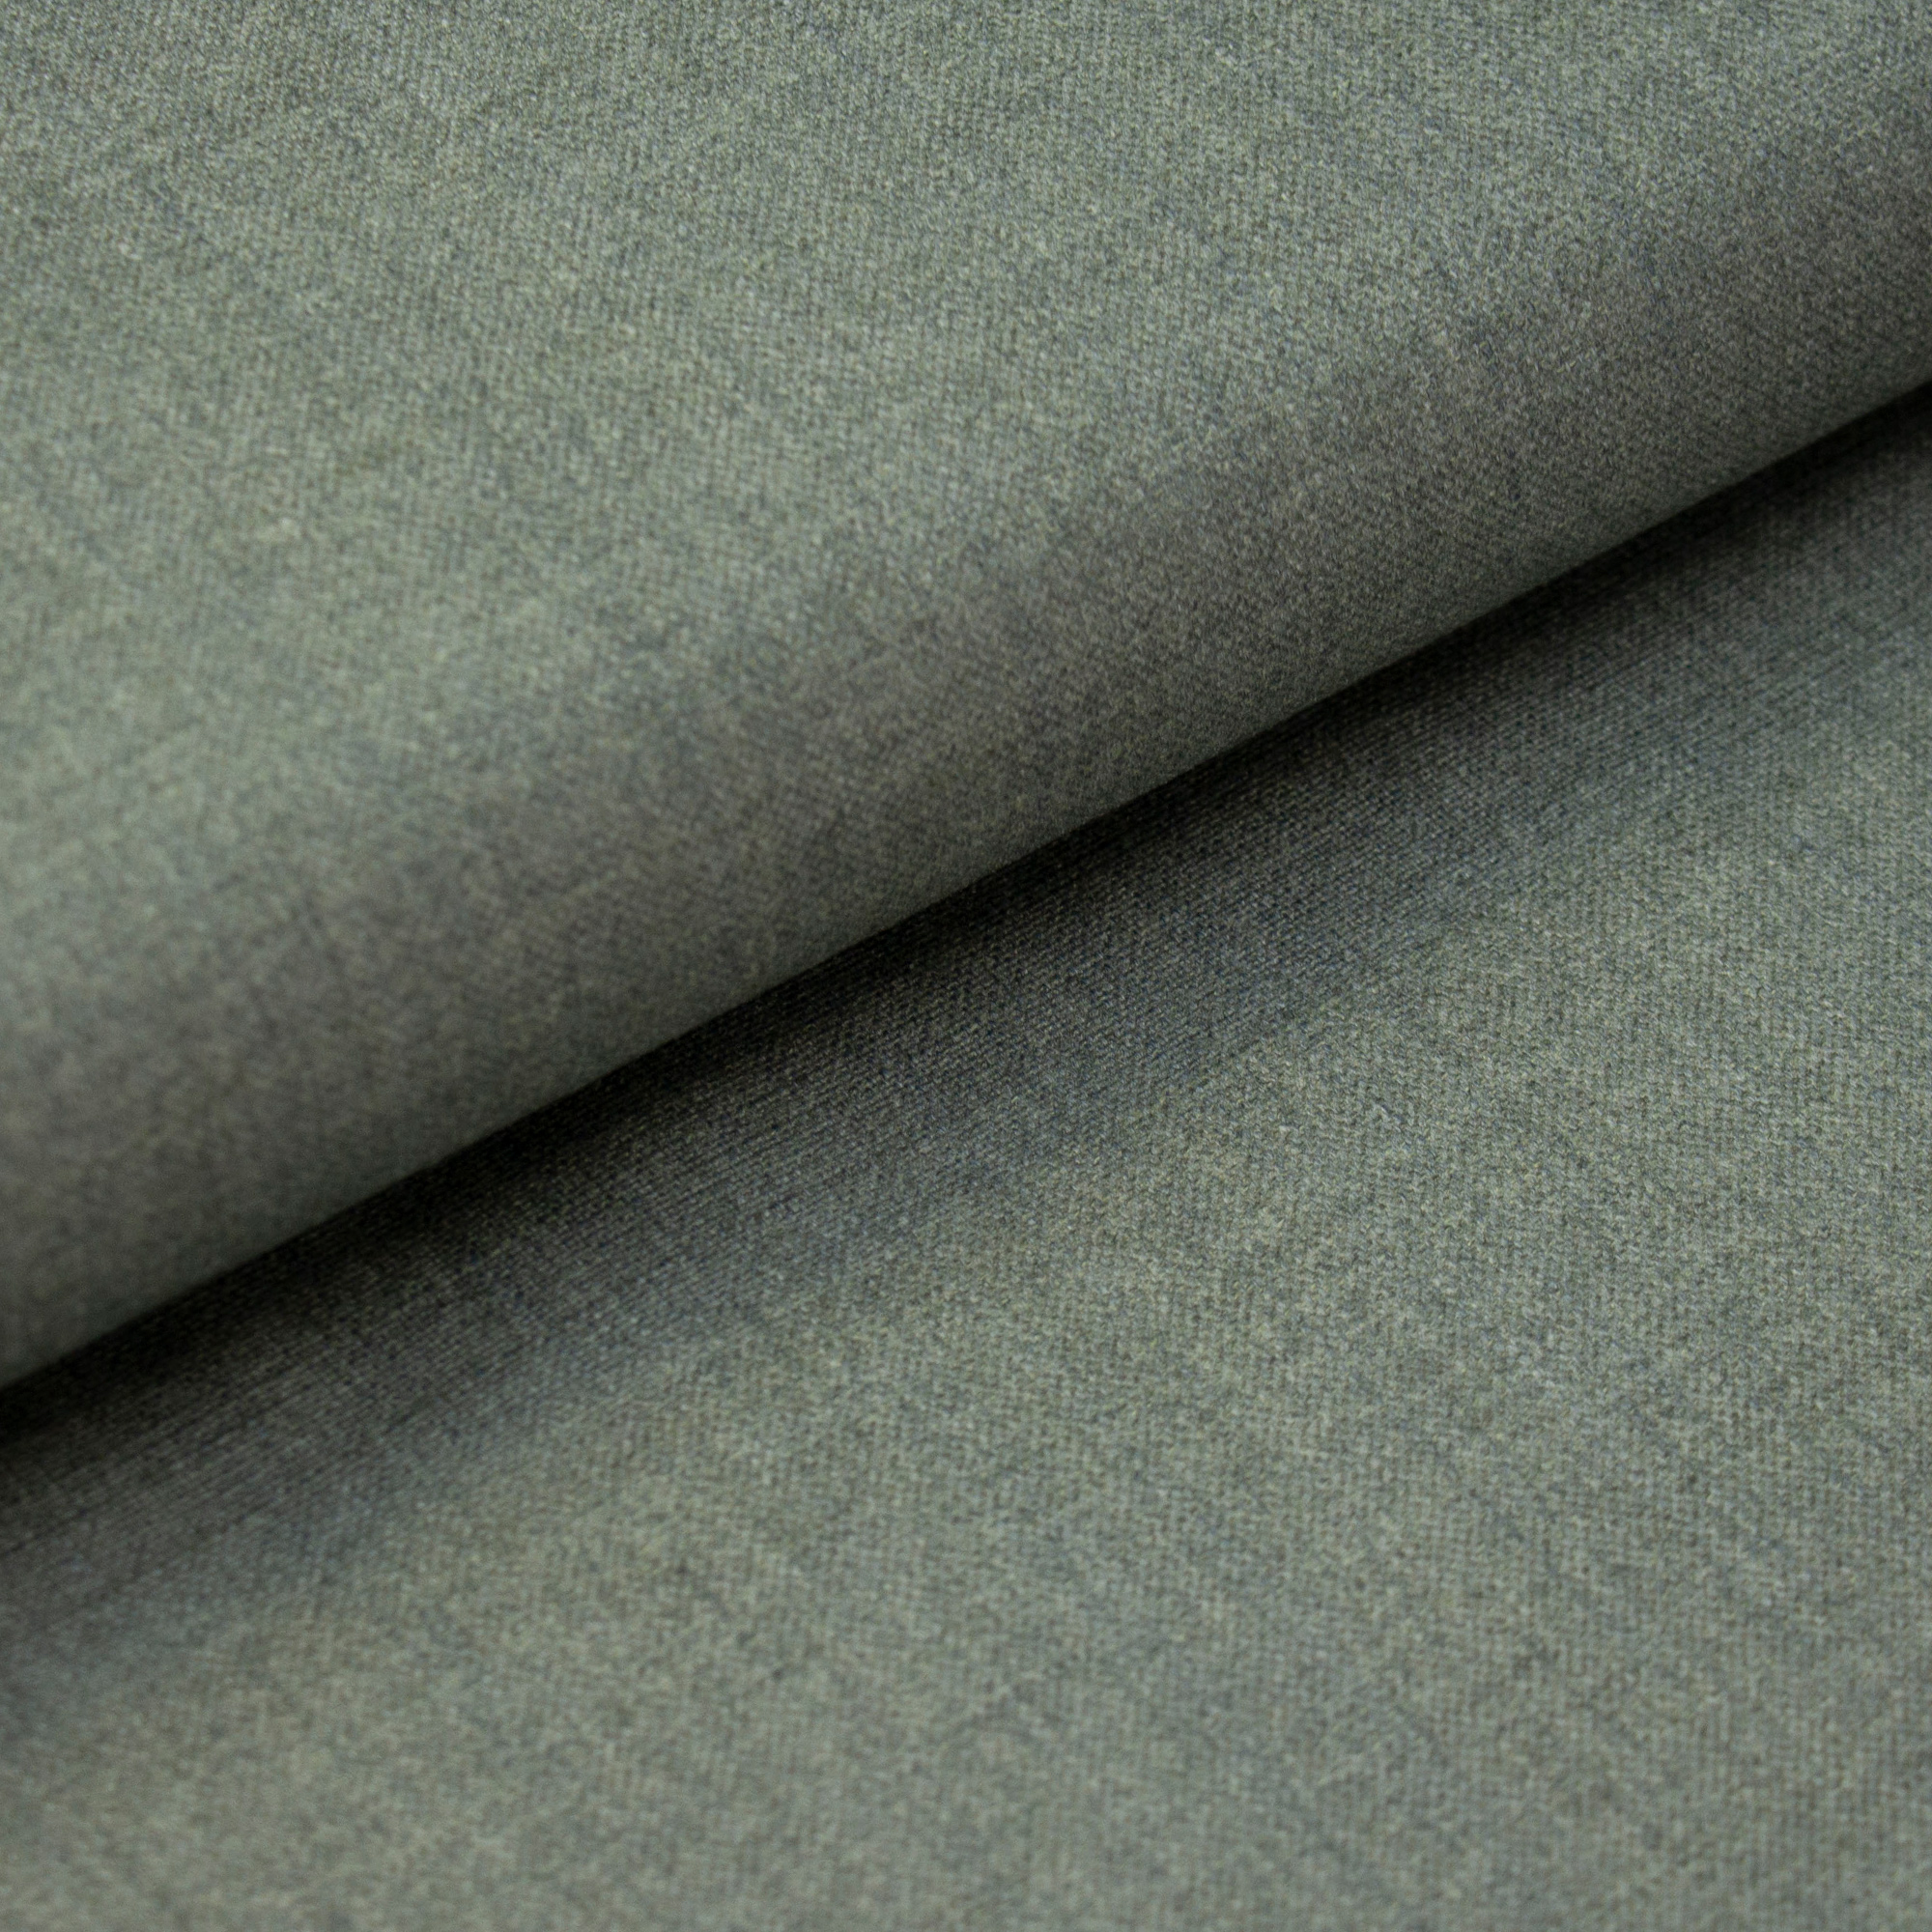 Impression de photos sur tissu coton, lin, soie - Fibra Creativa Textile  Studio